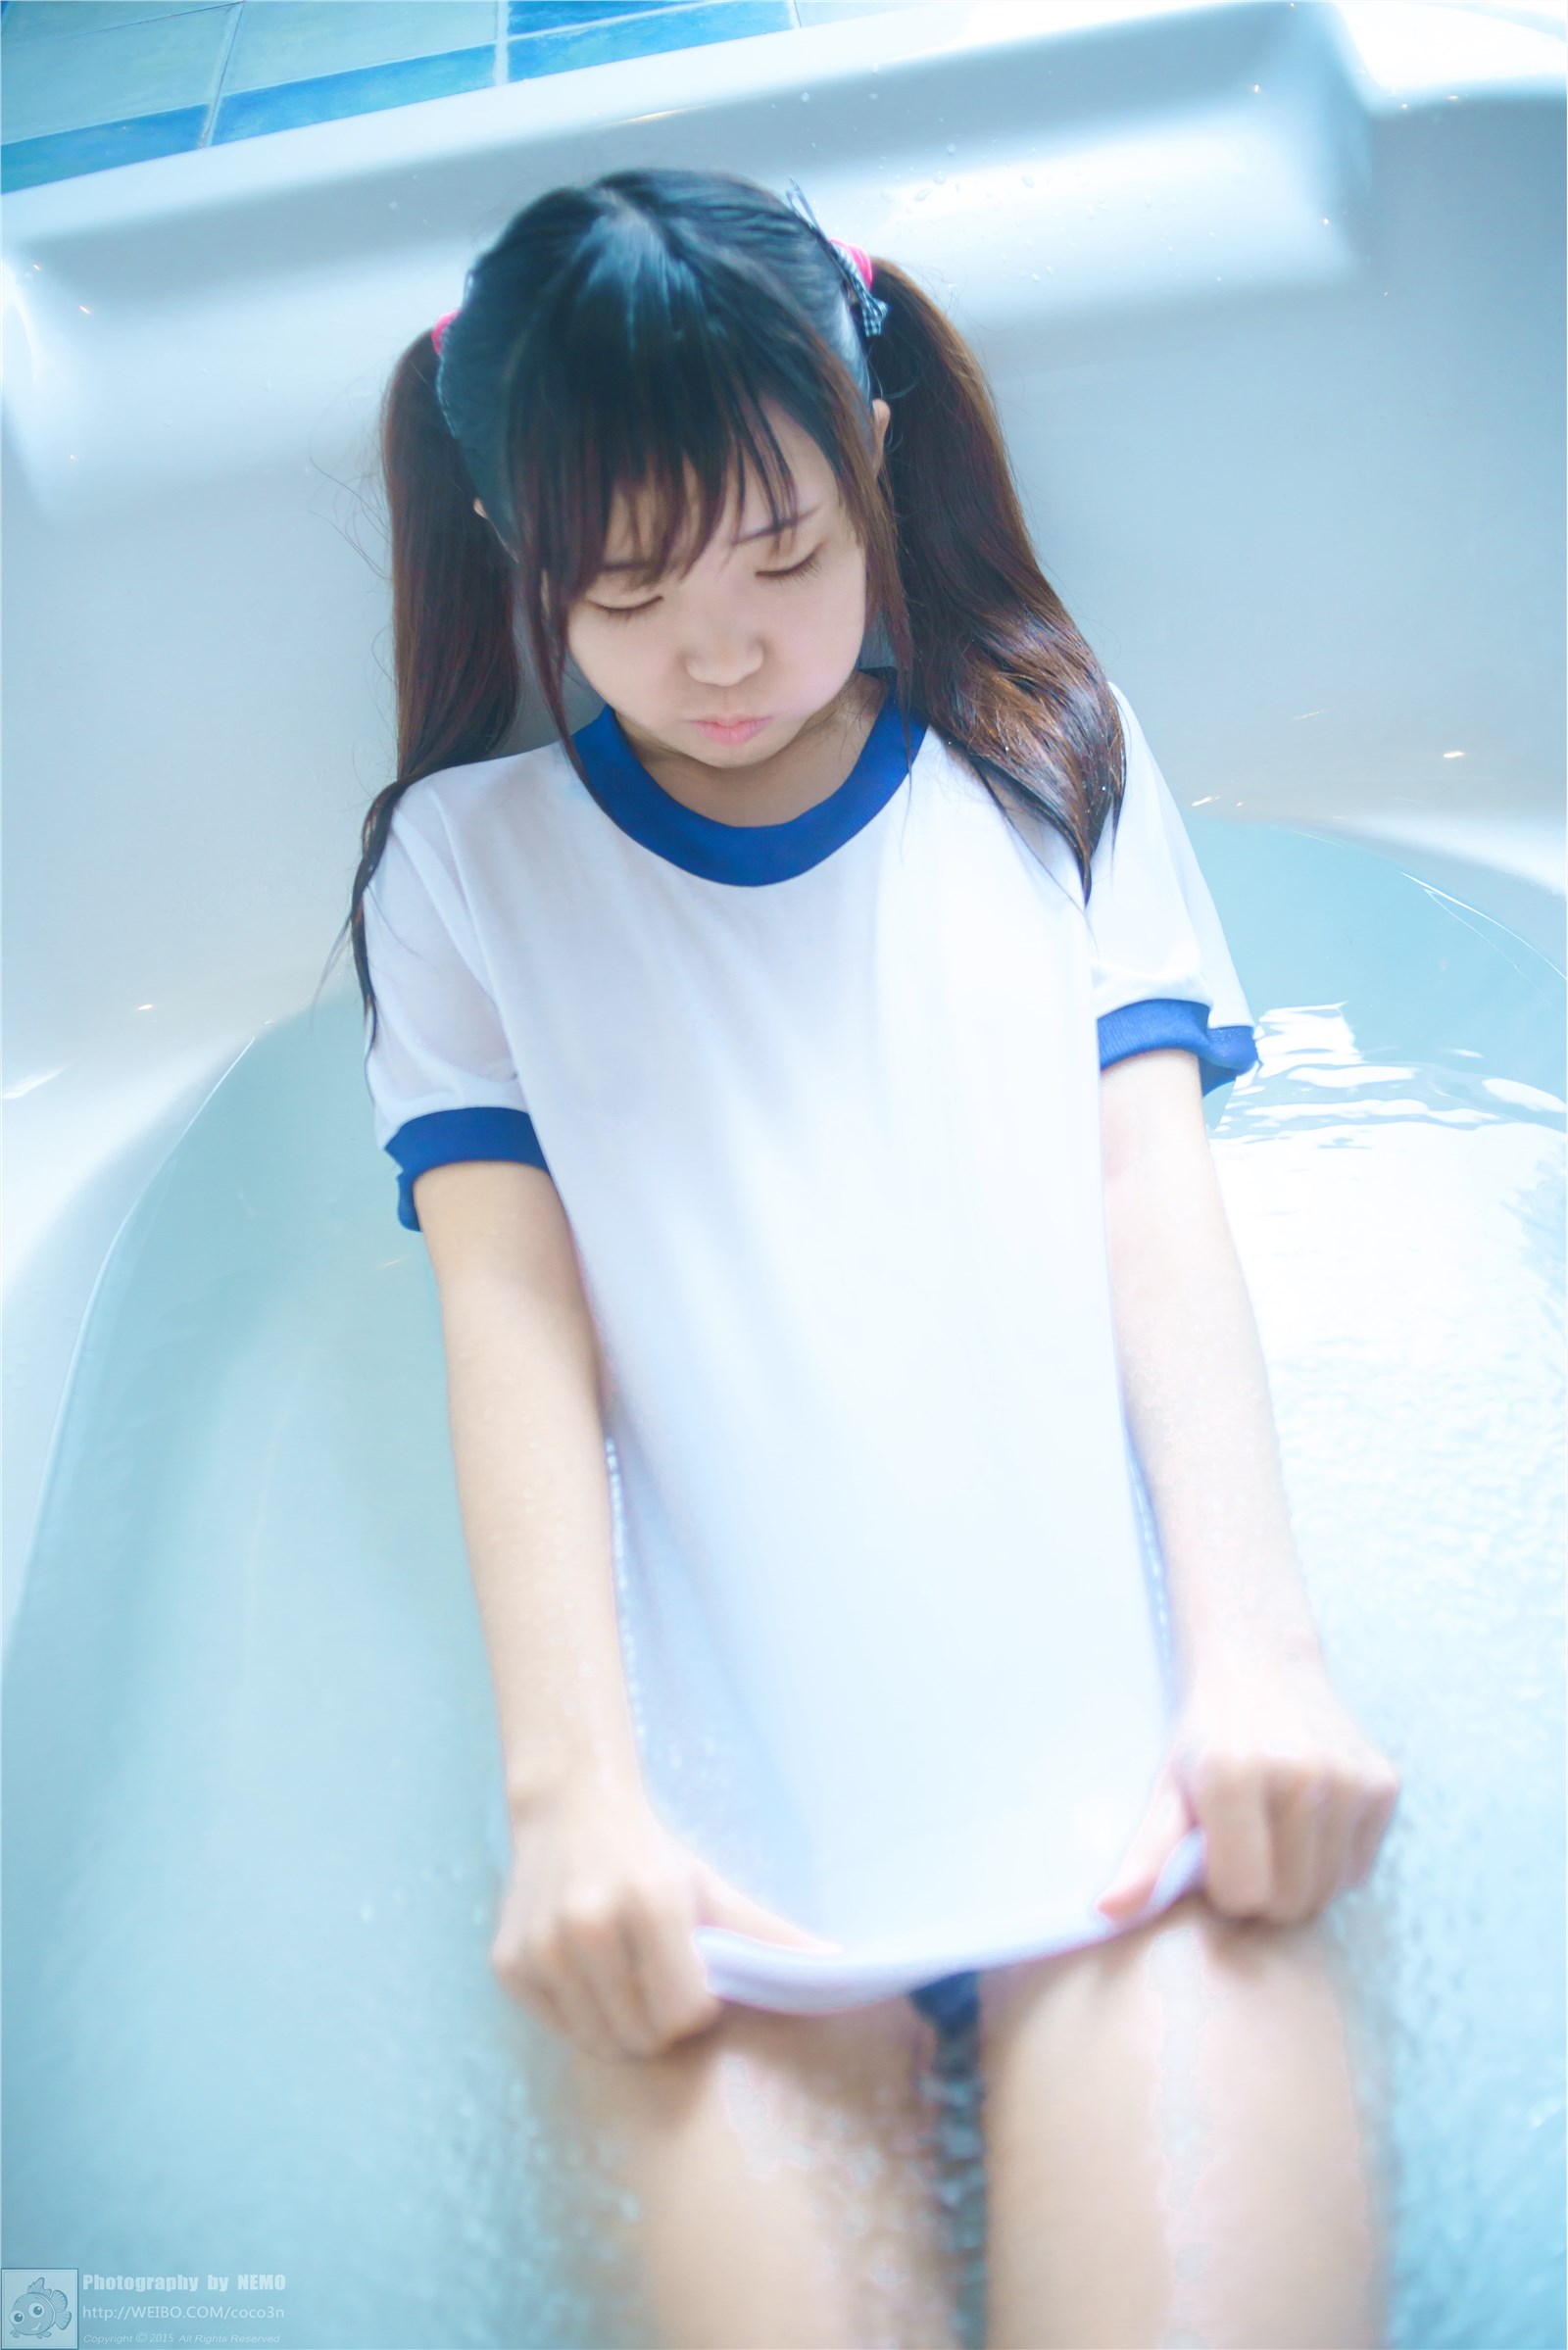 Yumiko gymnastic outfit(16)